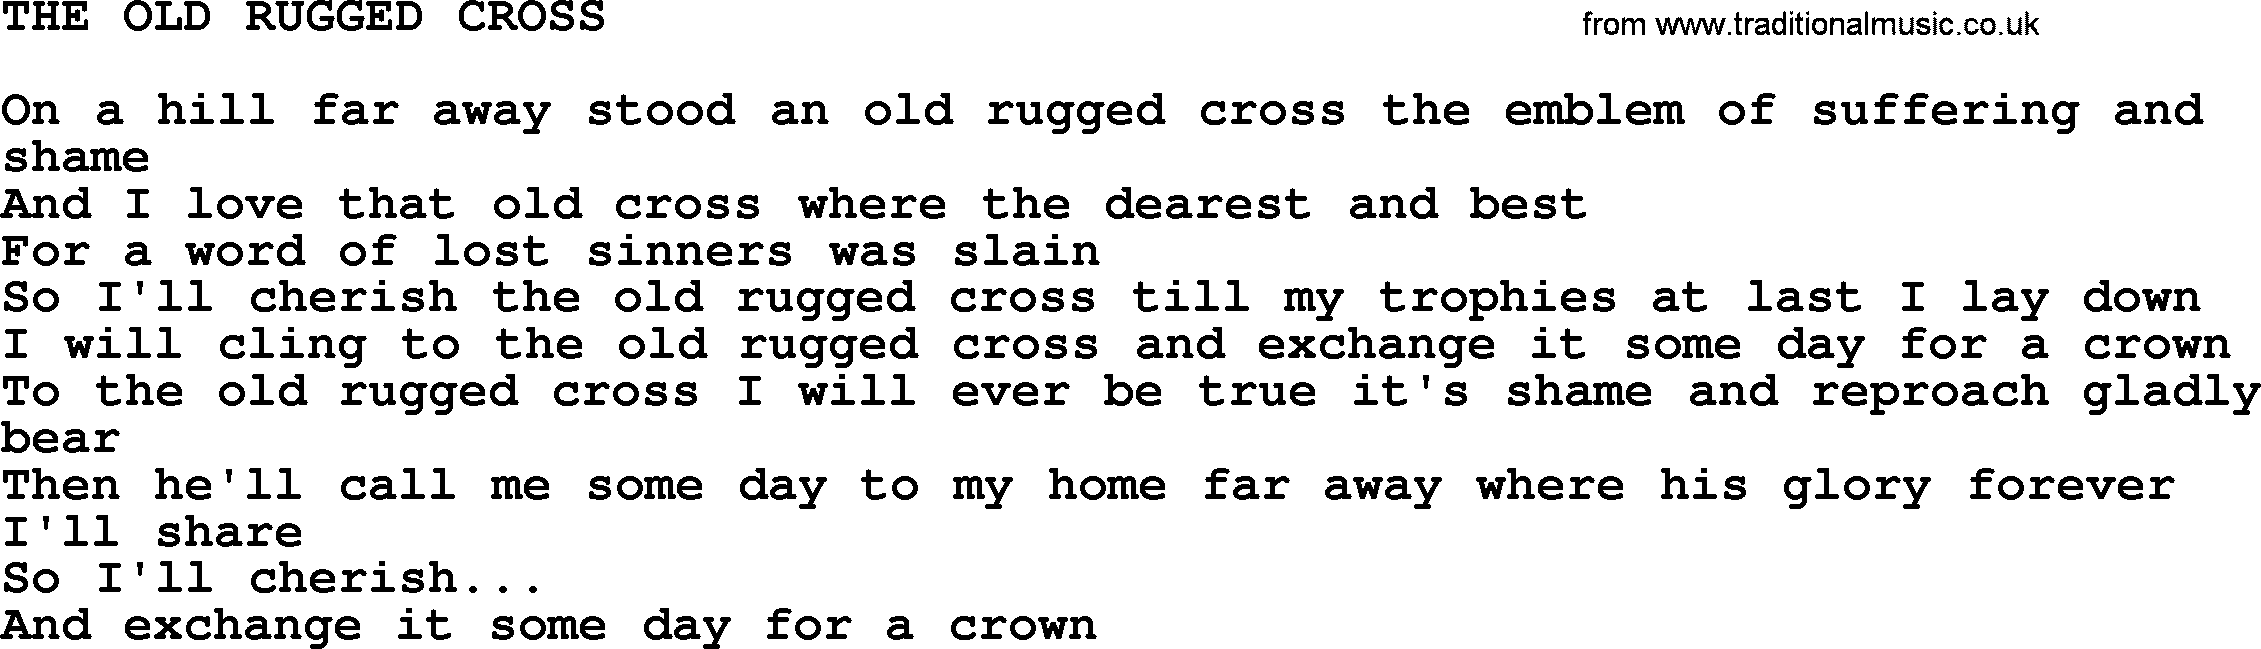 Johnny Cash song The Old Rugged Cross.txt lyrics